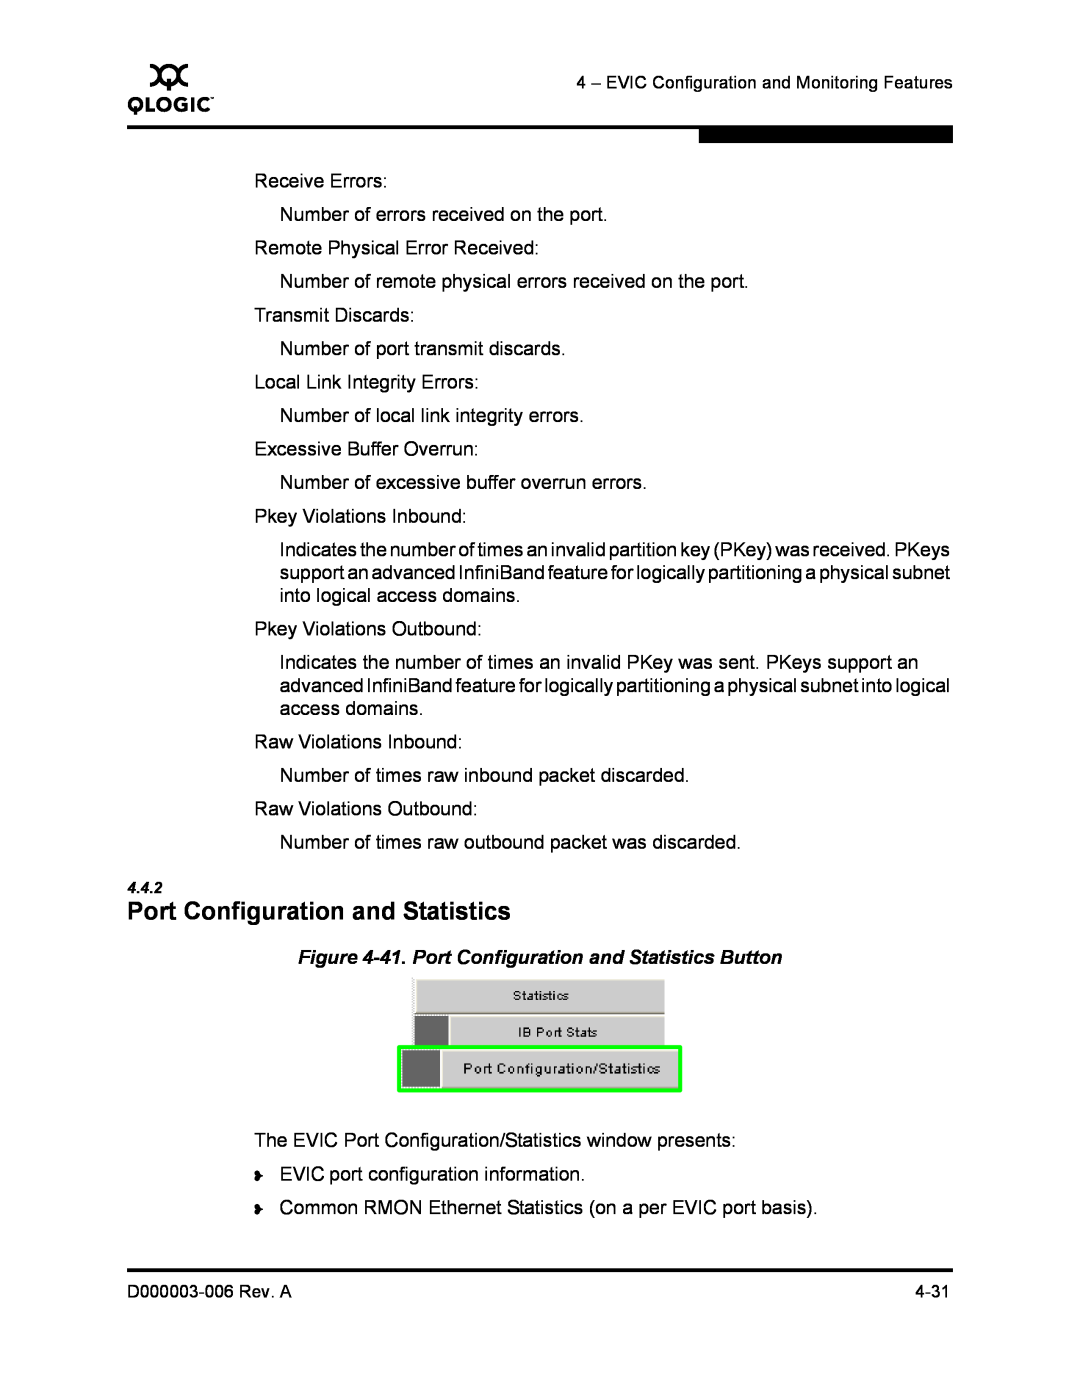 Q-Logic 9000 manual 41. Port Configuration and Statistics Button 